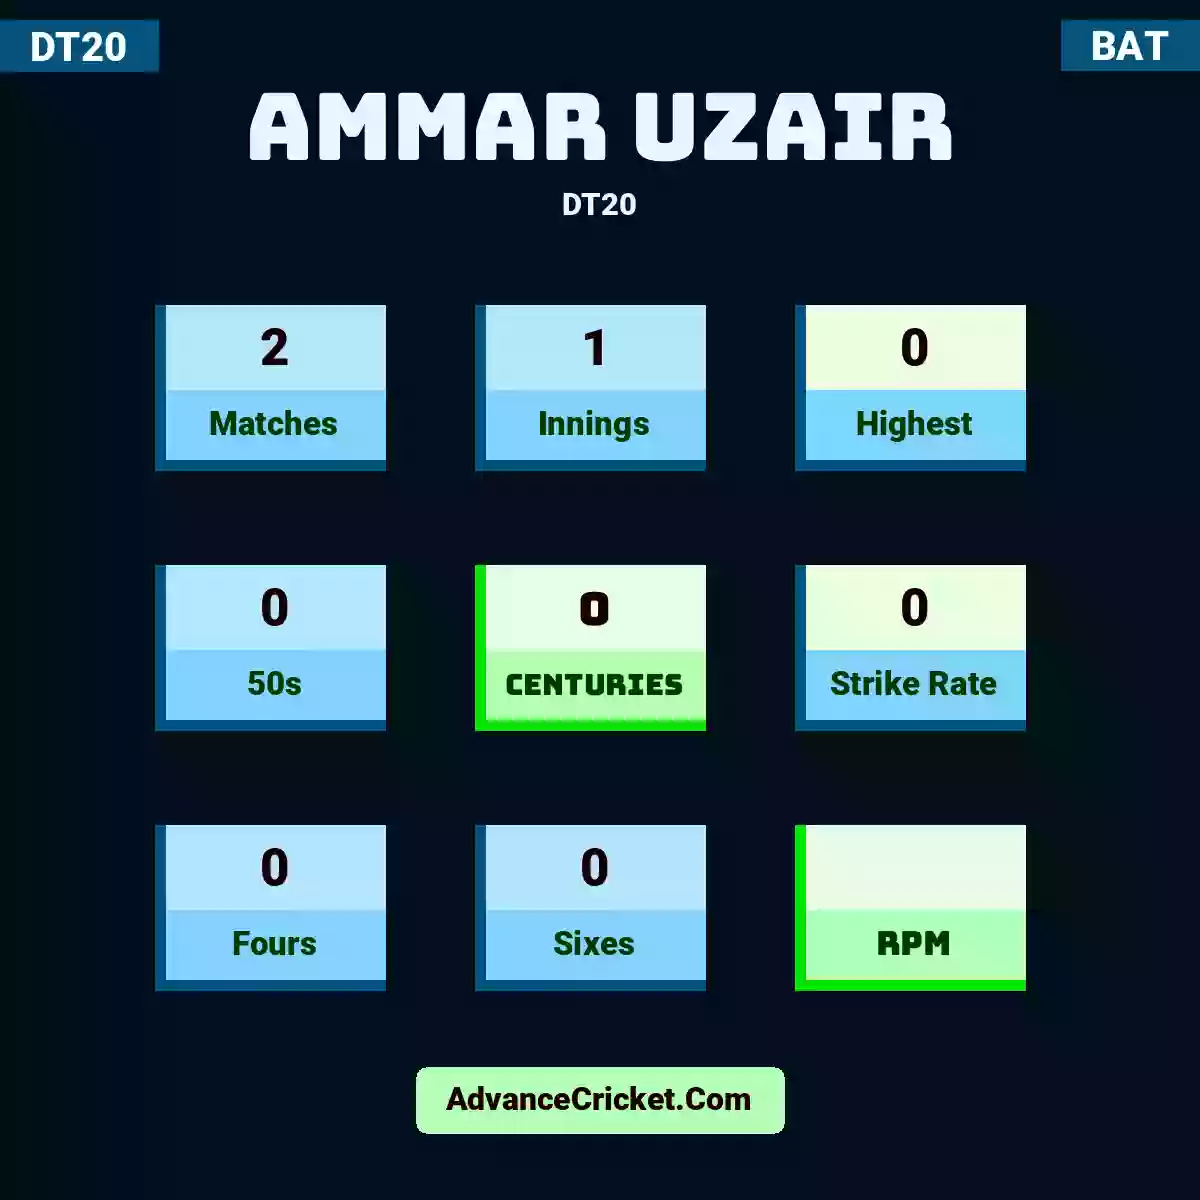 Ammar Uzair DT20 , Ammar Uzair played 2 matches, scored 0 runs as highest, 0 half-centuries, and 0 centuries, with a strike rate of 0. A.Uzair hit 0 fours and 0 sixes.